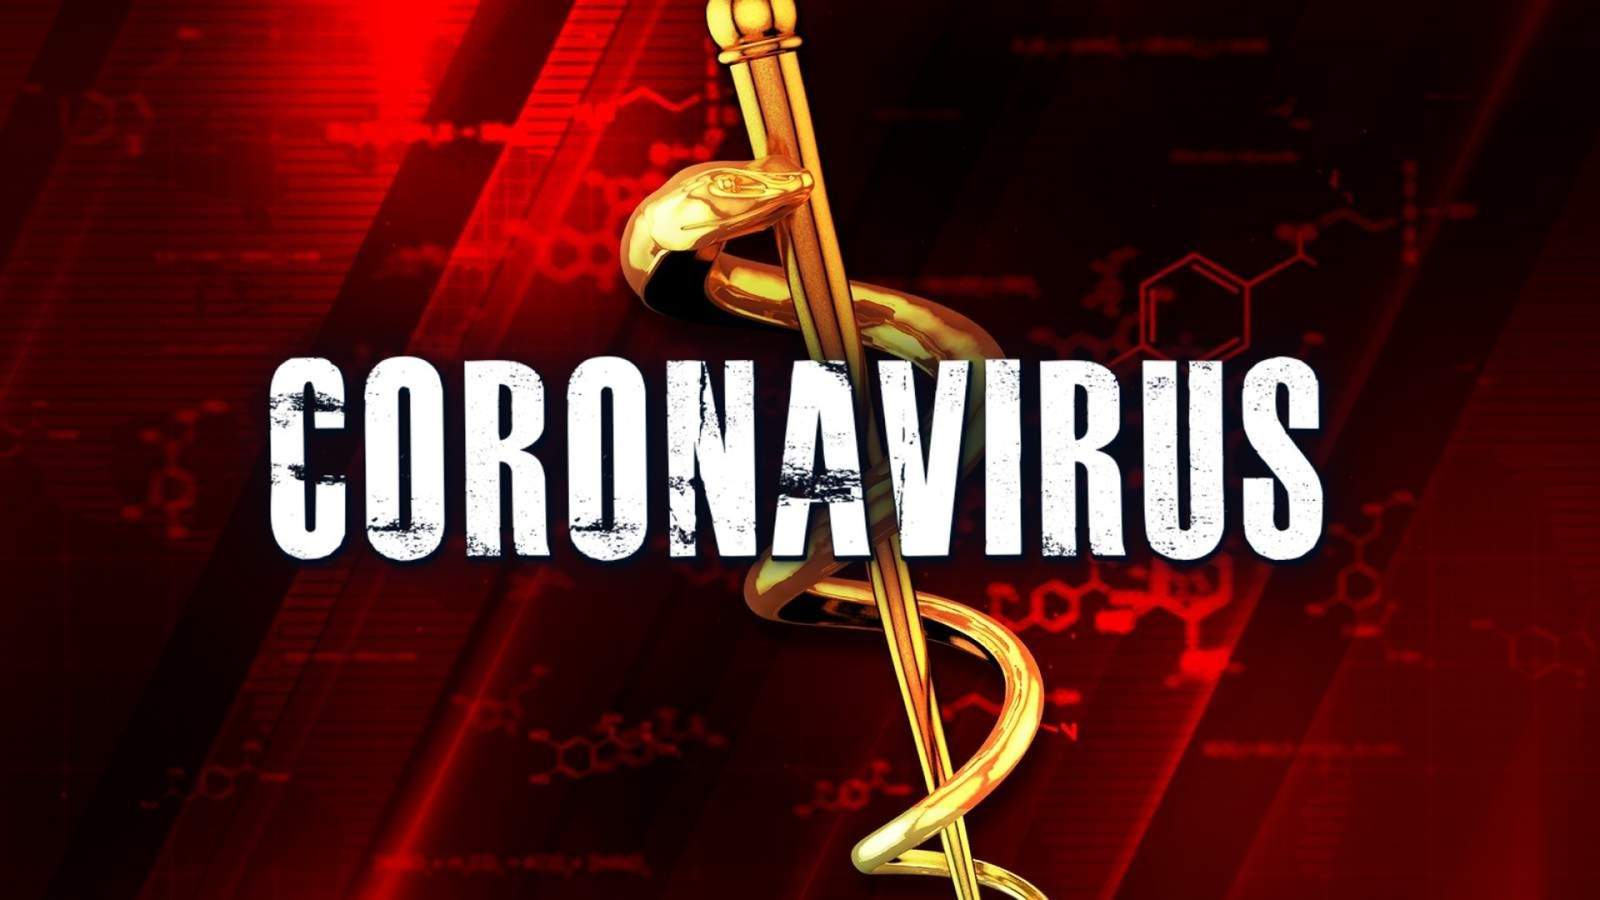 Florida health officials confirm 2 coronavirus deaths